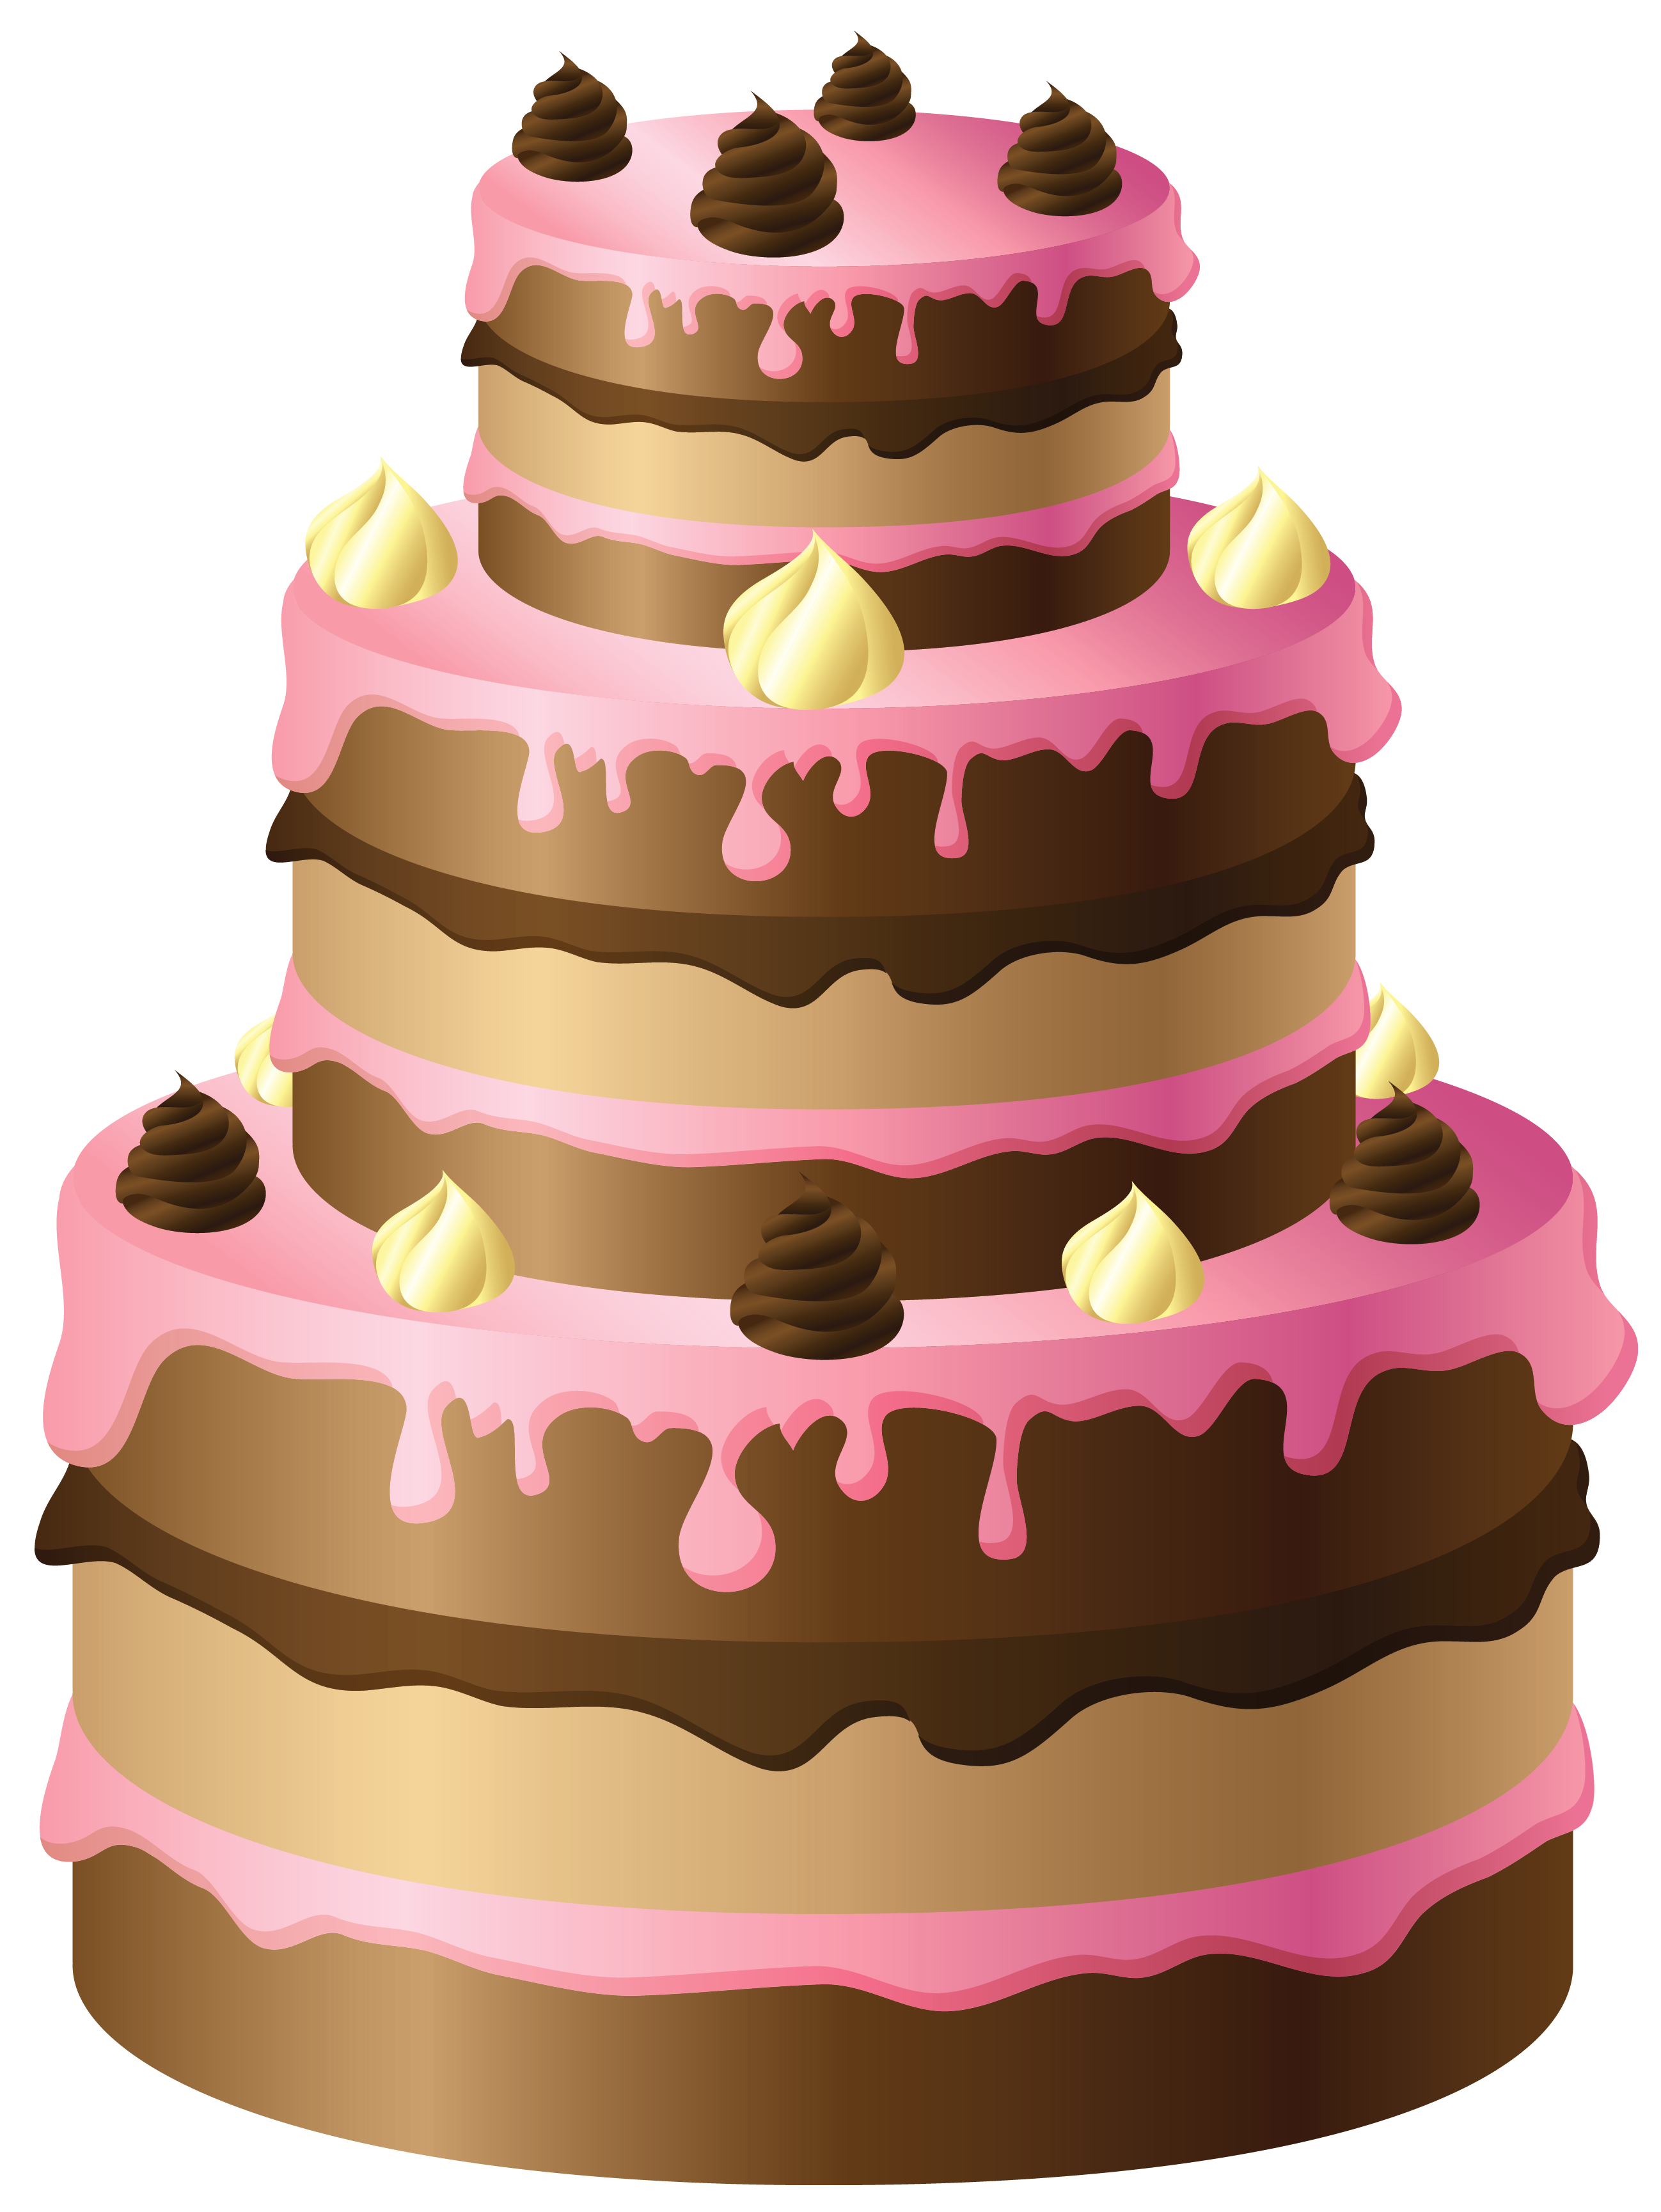 Birthday cake clip art free birthday cake clipart 2 